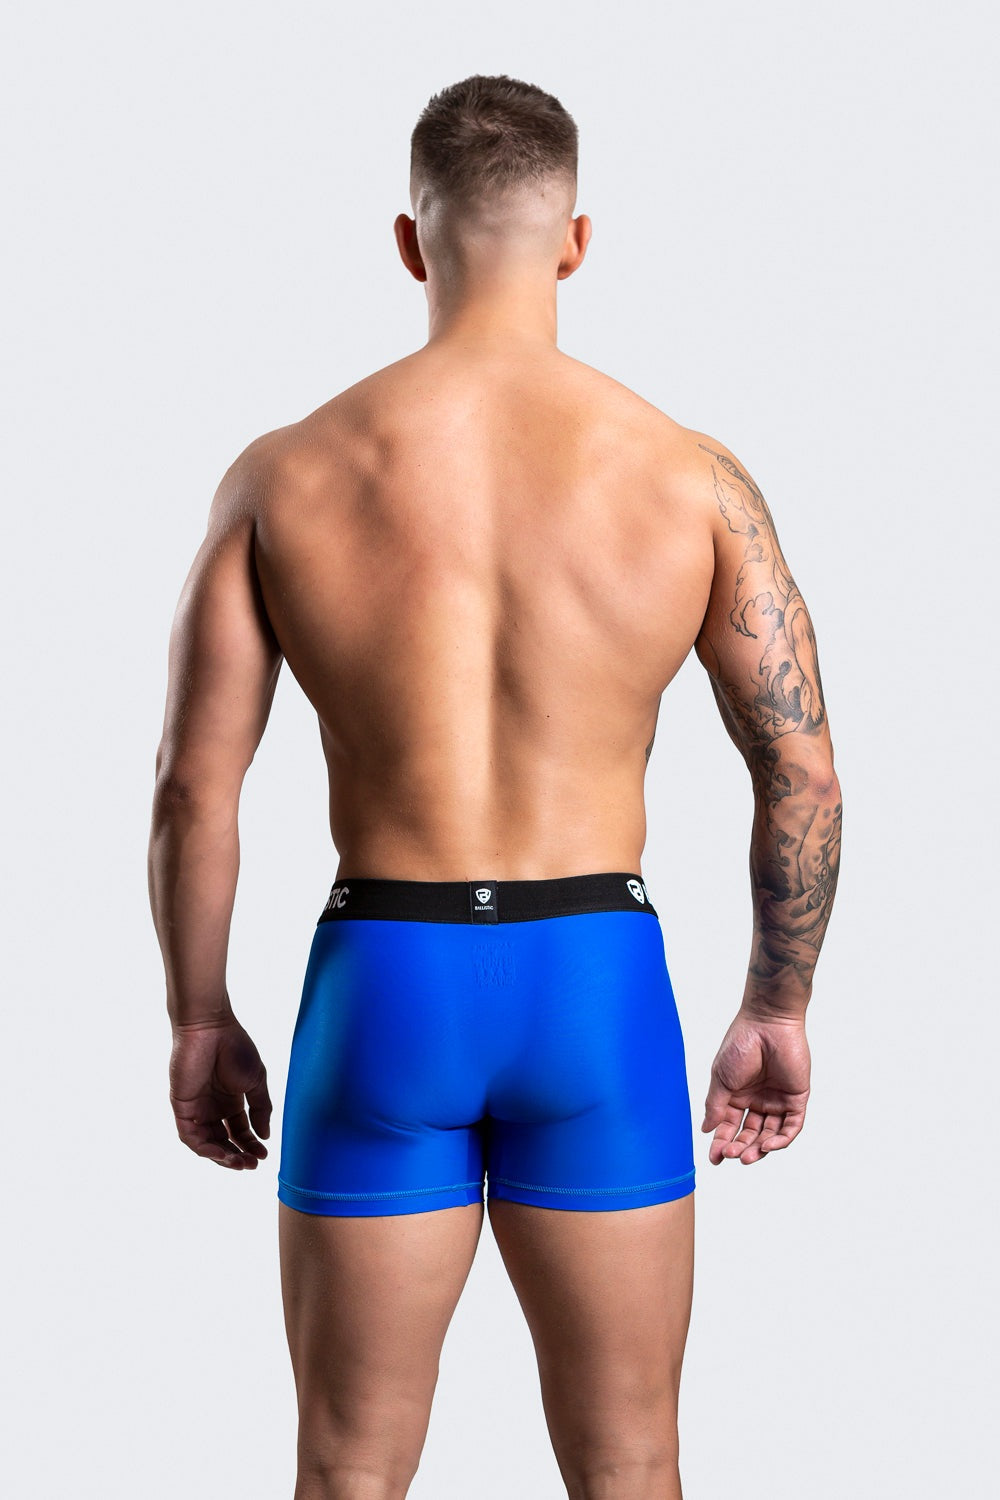 Ballistic Best Men's Underwear - Durable Nylon Lycra Blue Boxer